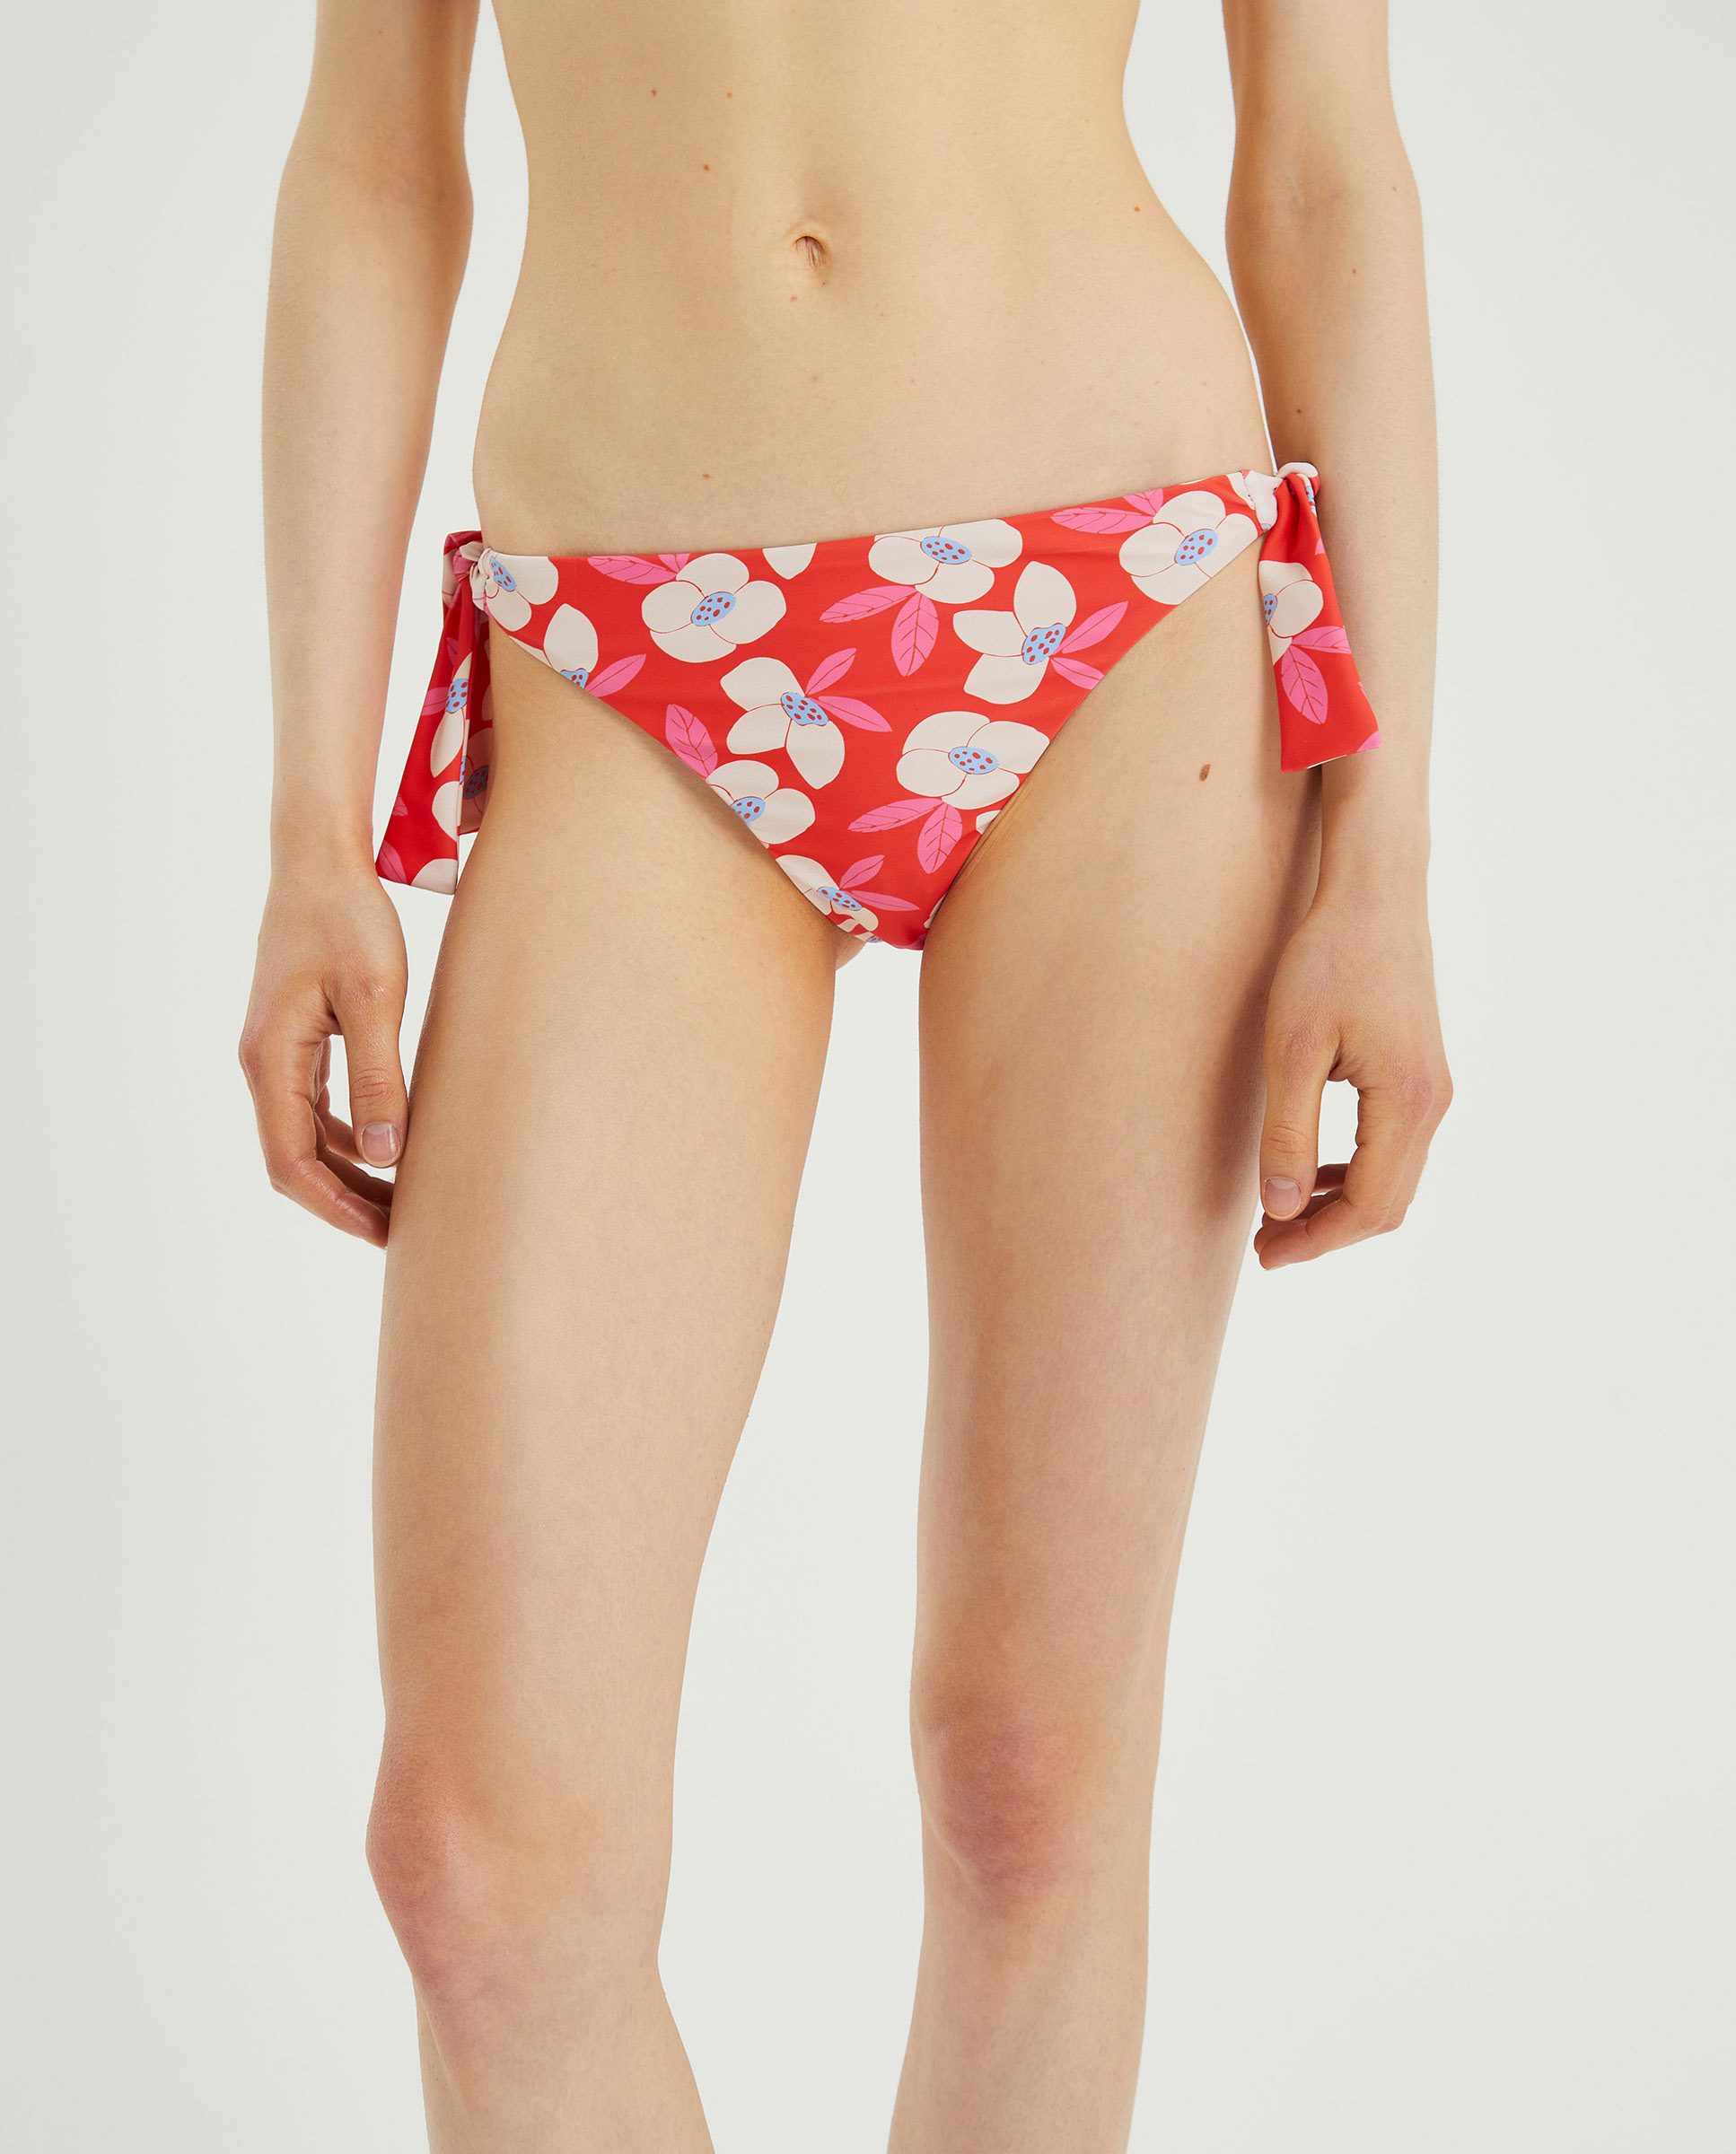 Bikini Bottom Μαγιό Με Κόκκινο Φλοράλ Σχέδιο Compania Fantastica